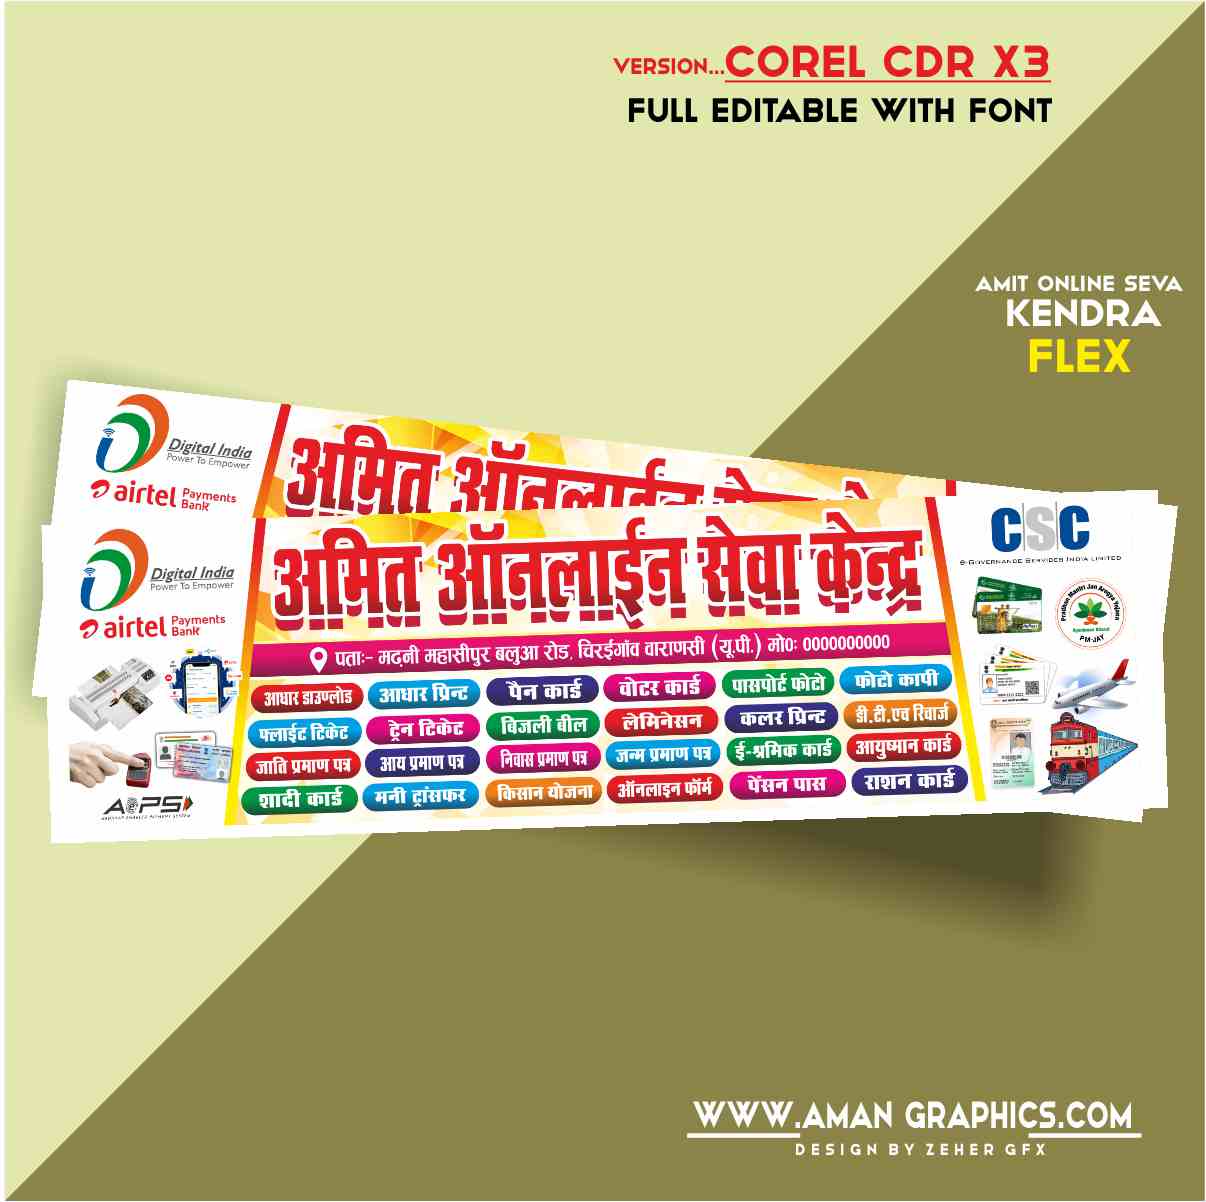 Amit Online Seva Kendra (CSC) Banner Design Cdr File